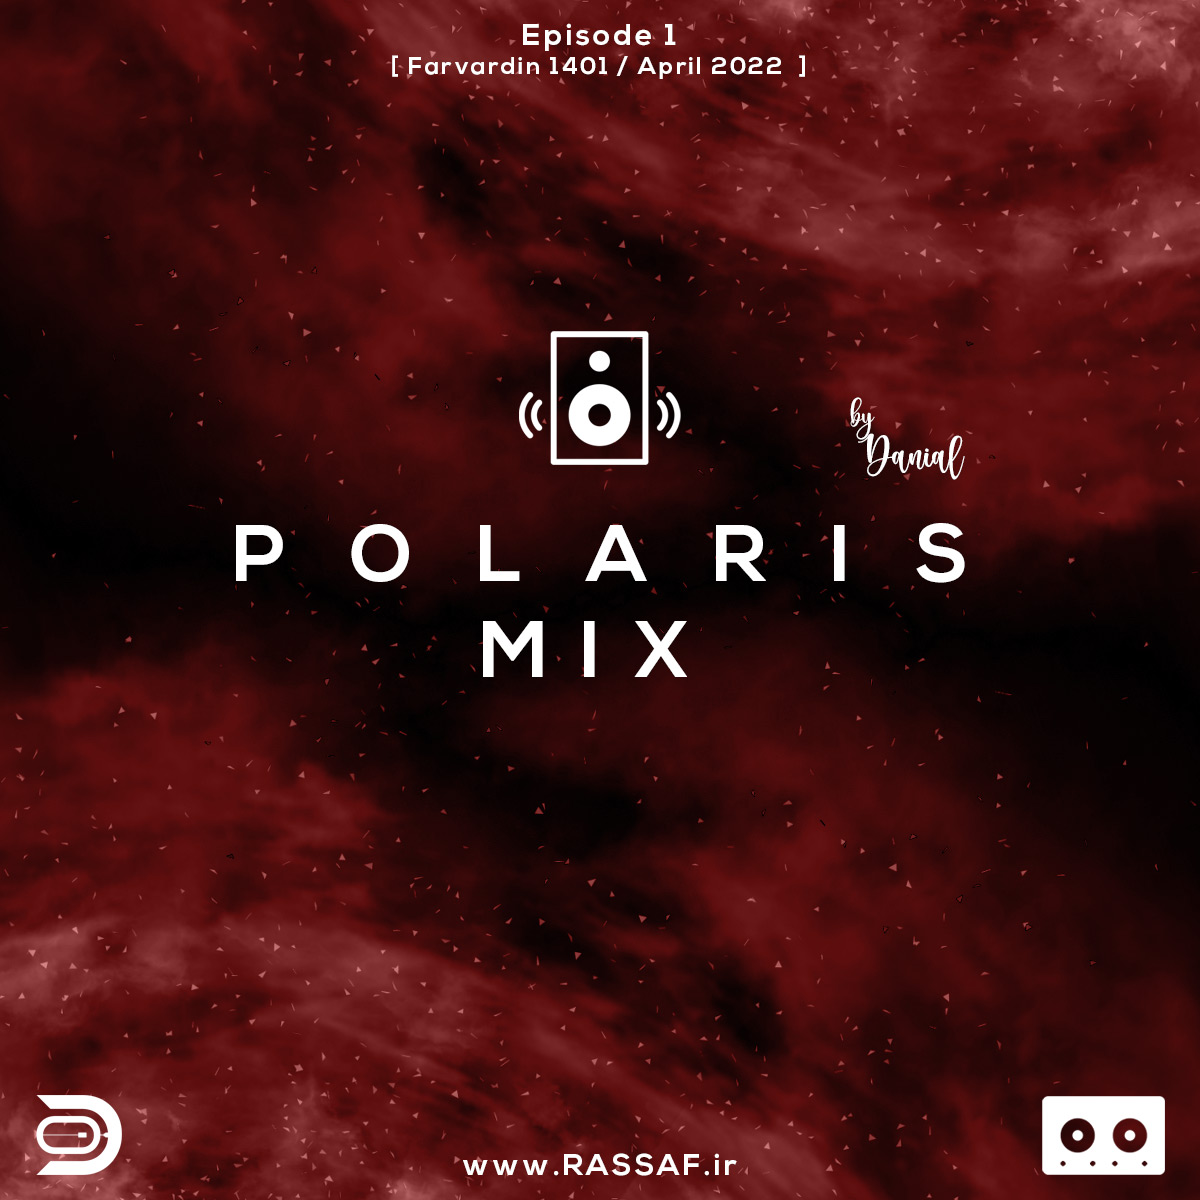 polaris-mix-episode-1-danial-rassaf